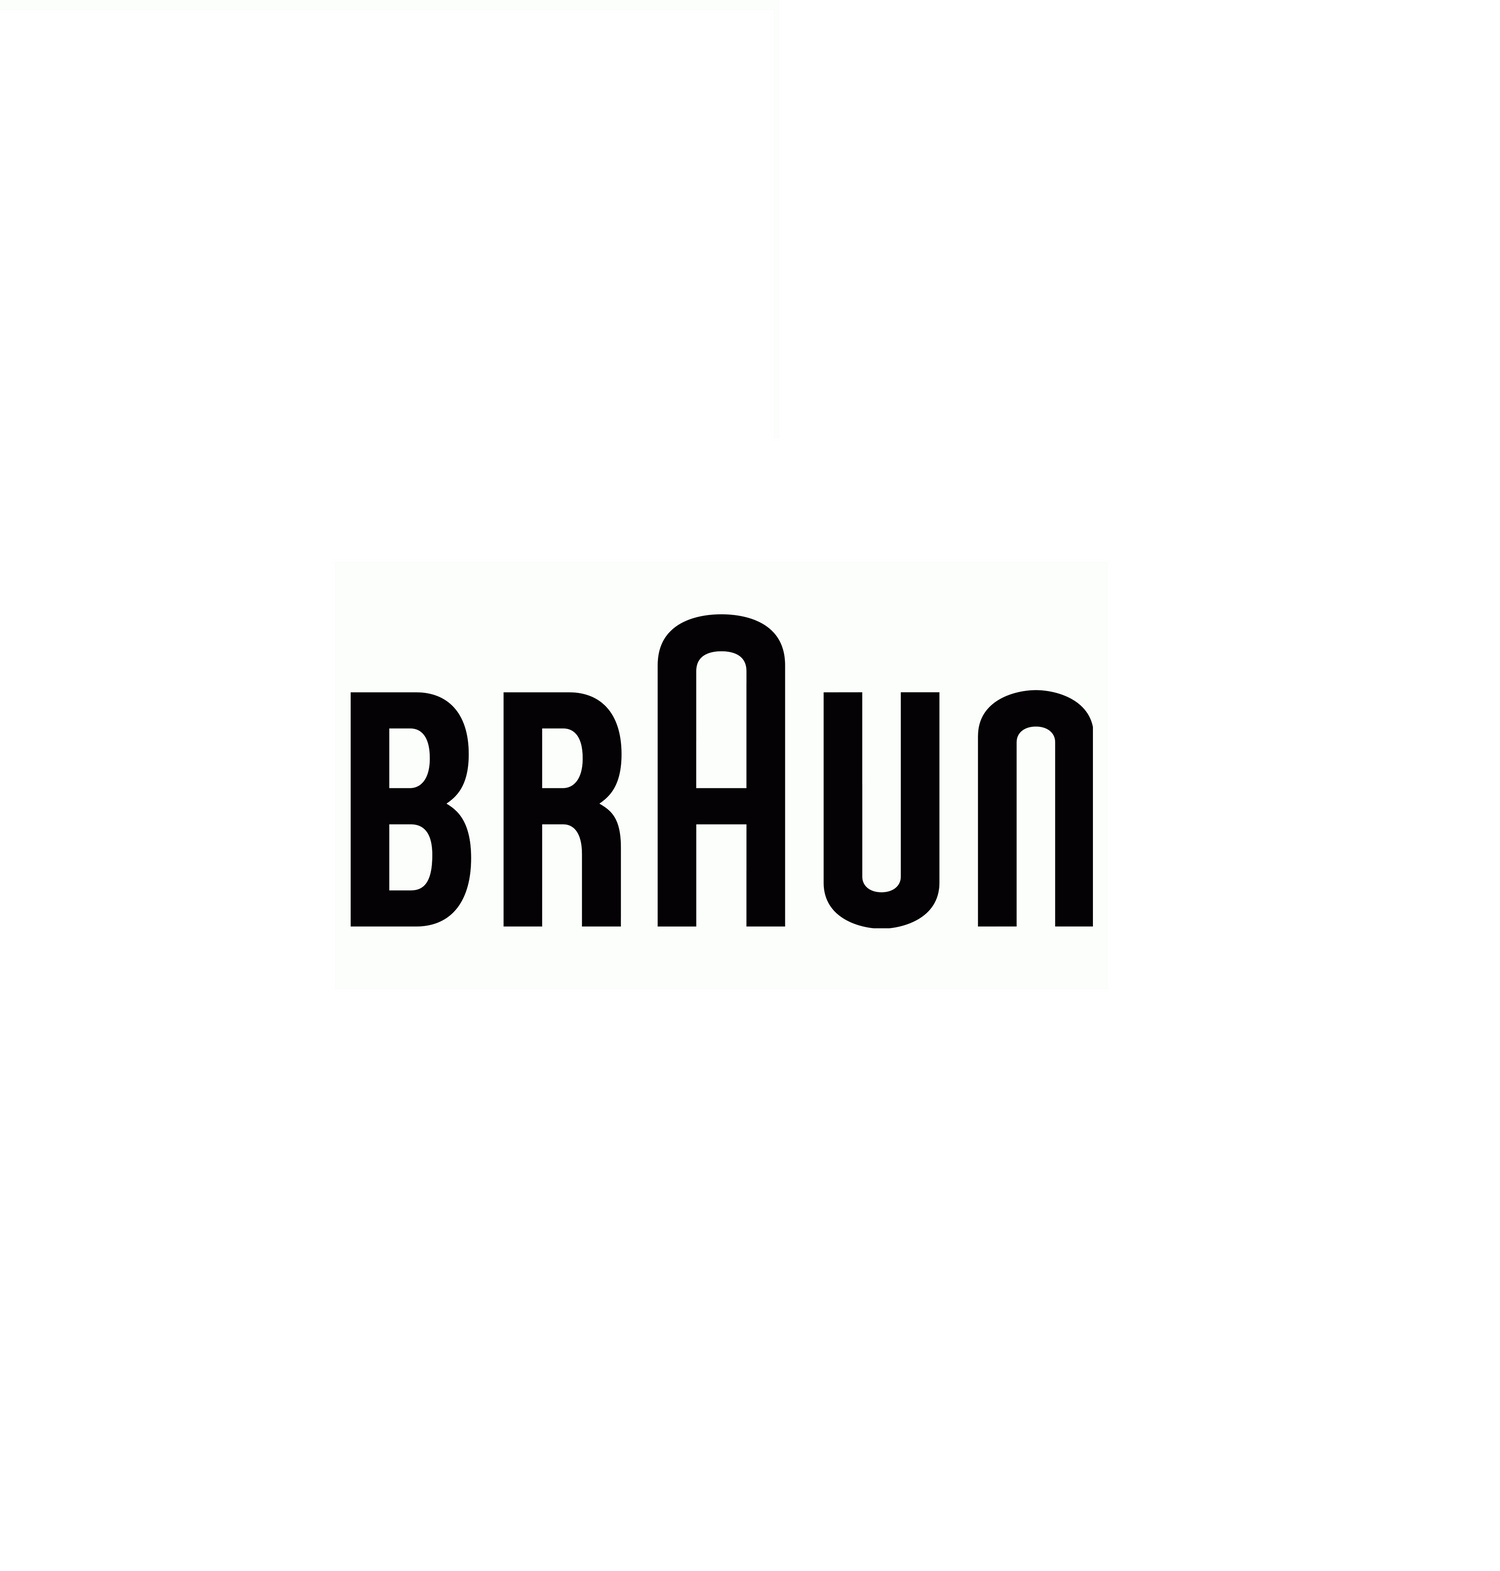 BrAun